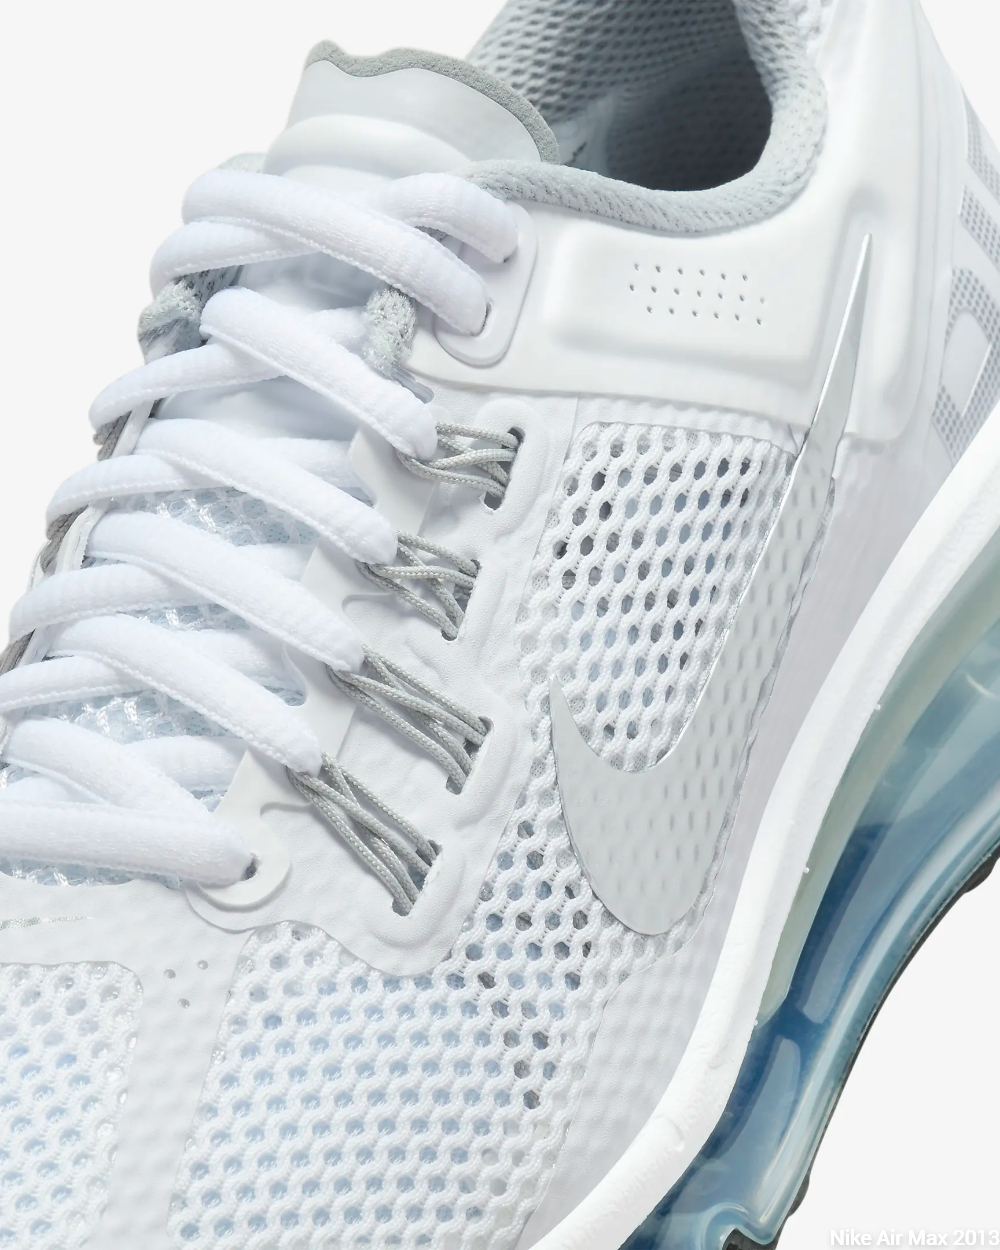 Nike Air Max 2013 - laces